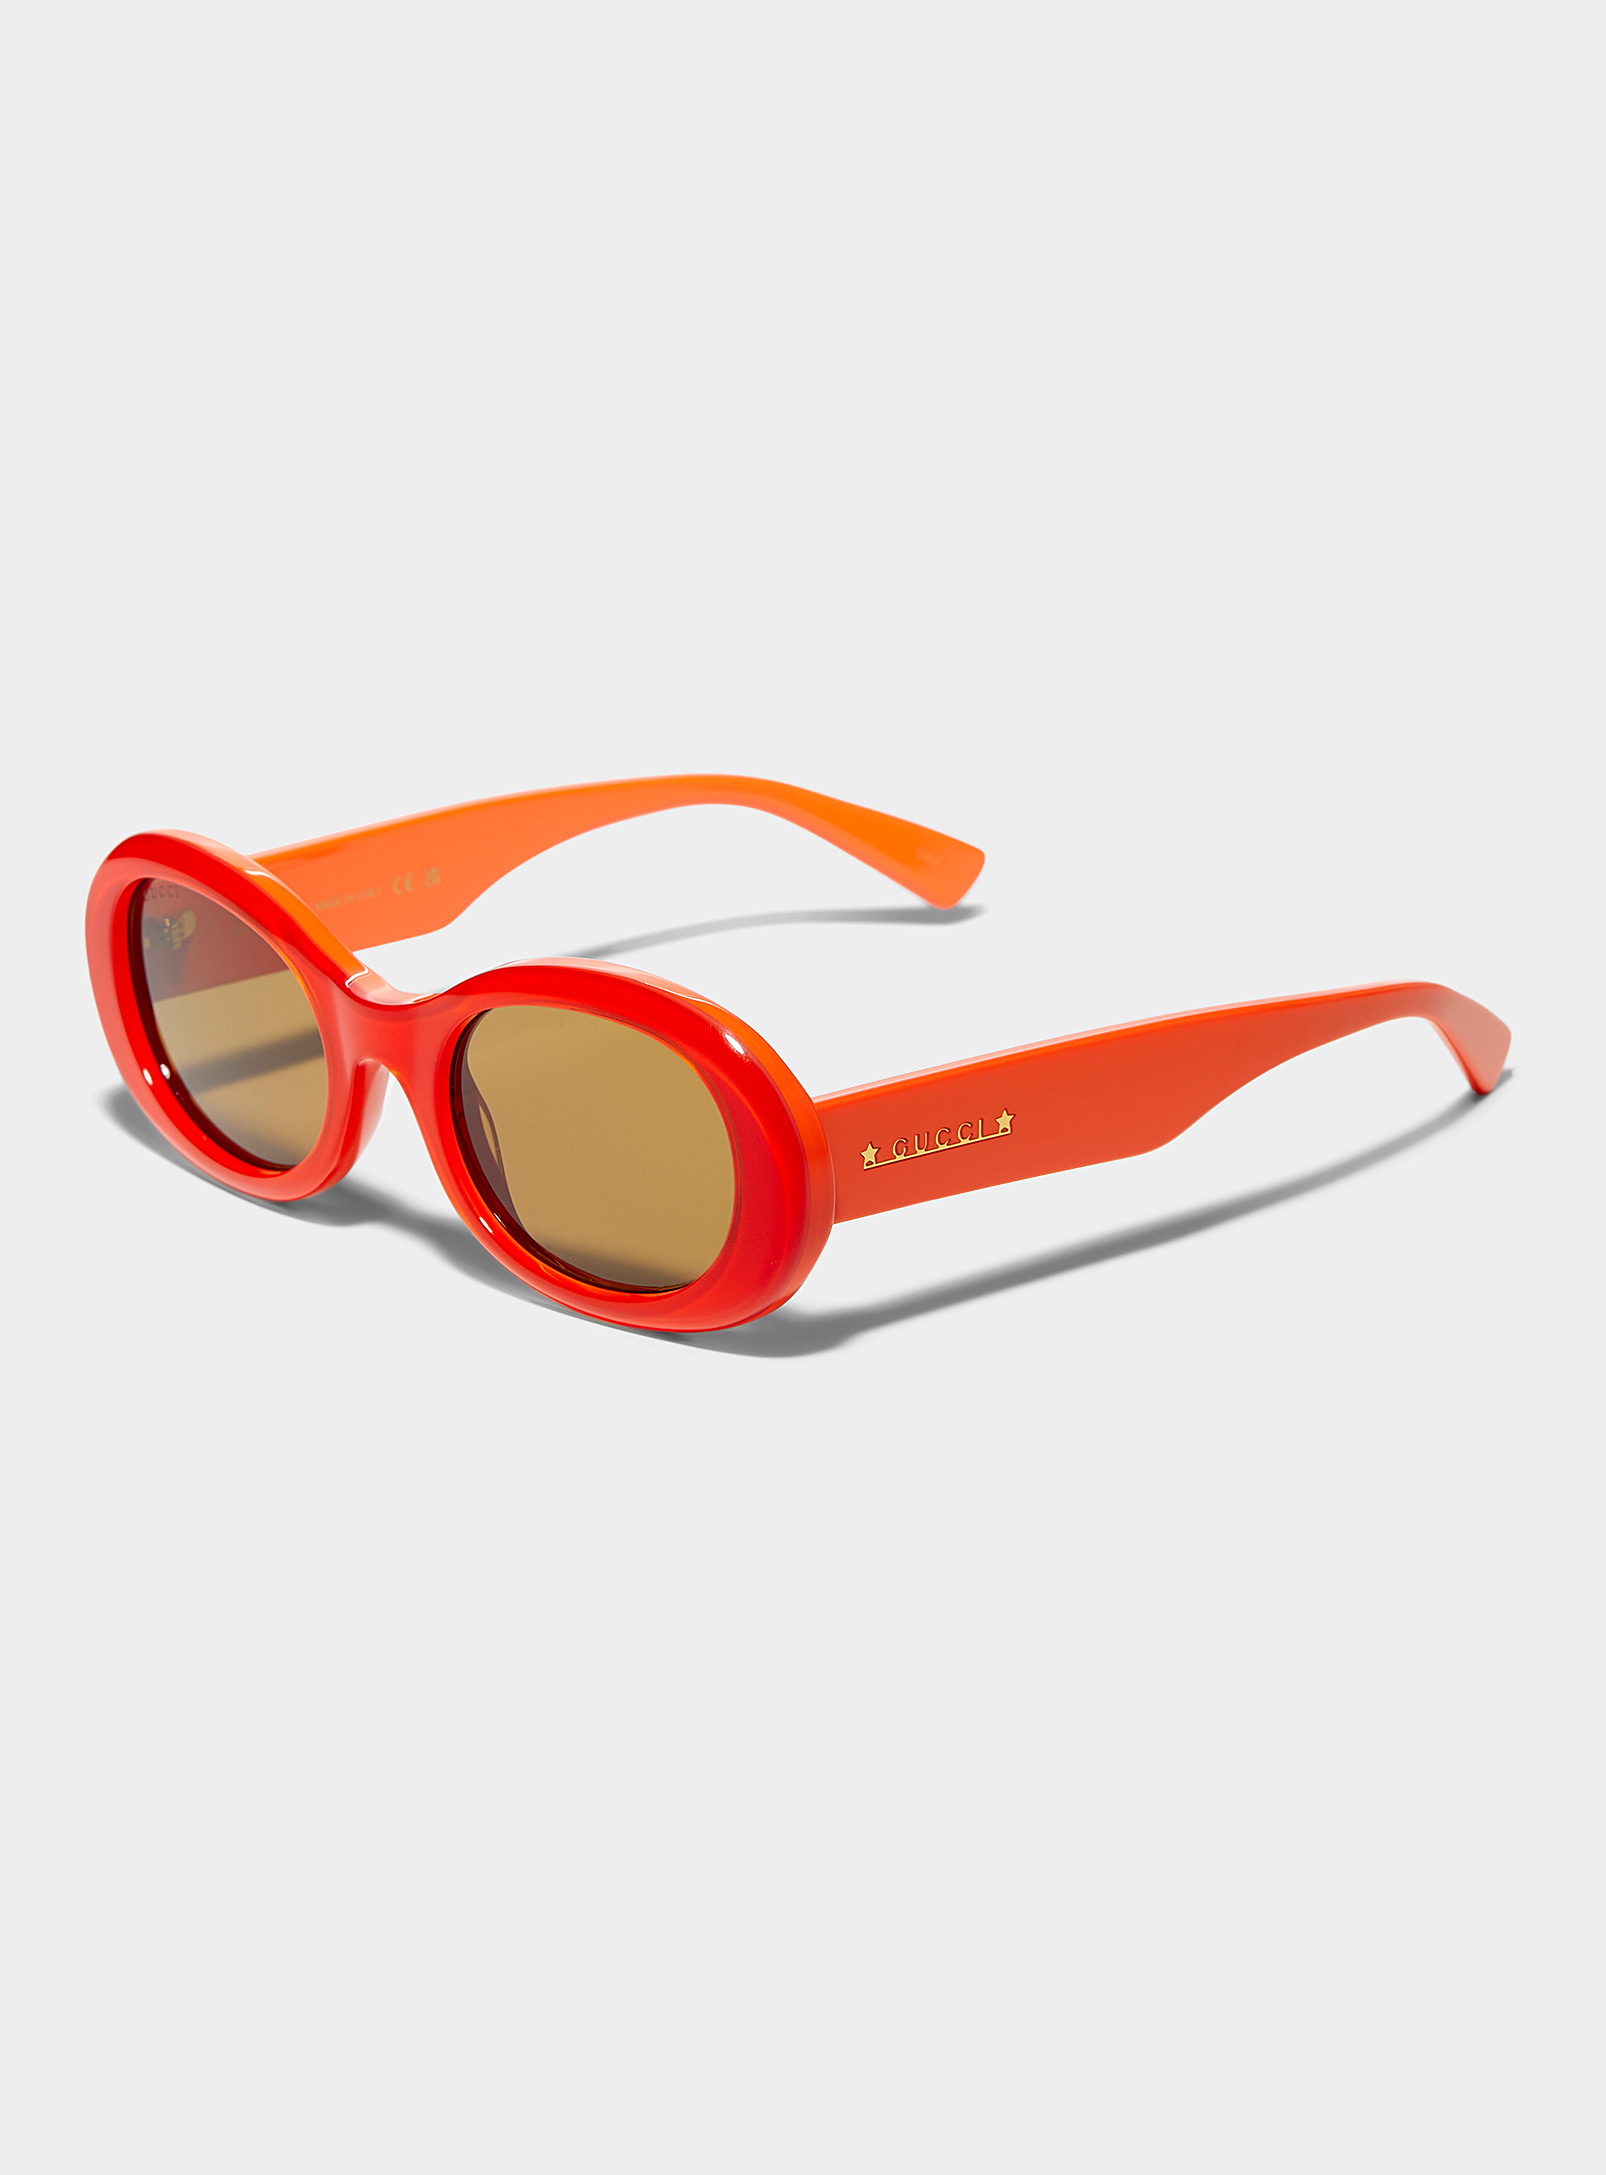 Gucci Electric Orange Oval Sunglasses In Red